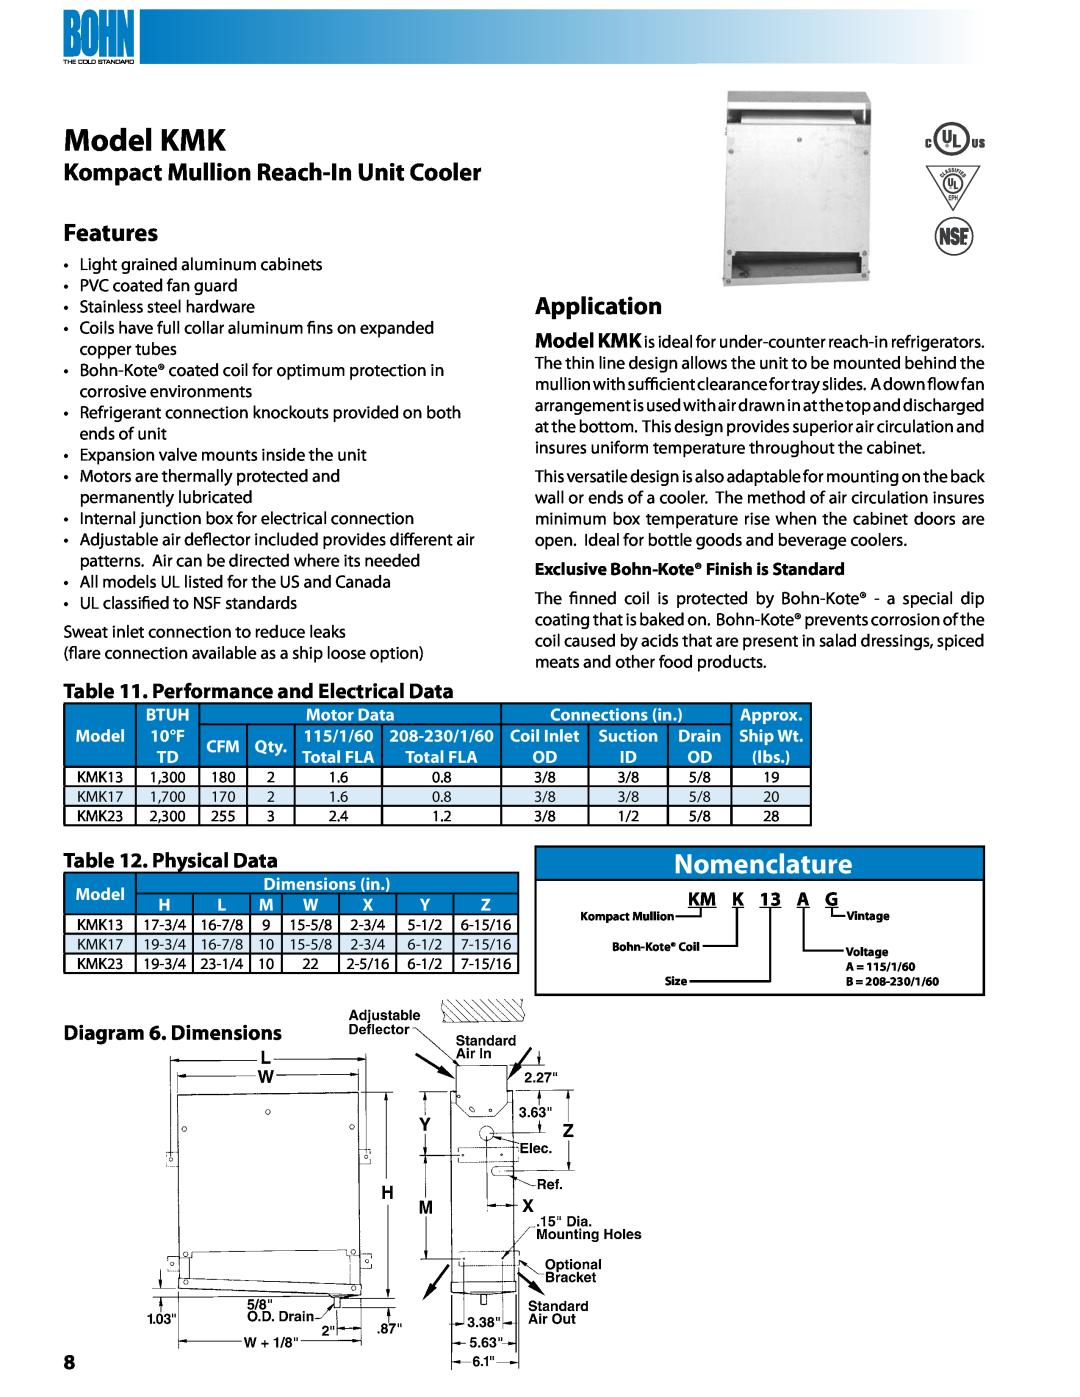 Heatcraft Refrigeration Products BBL Model KMK, Kompact Mullion Reach-InUnit Cooler Features, Physical Data, KM K 13 A G 